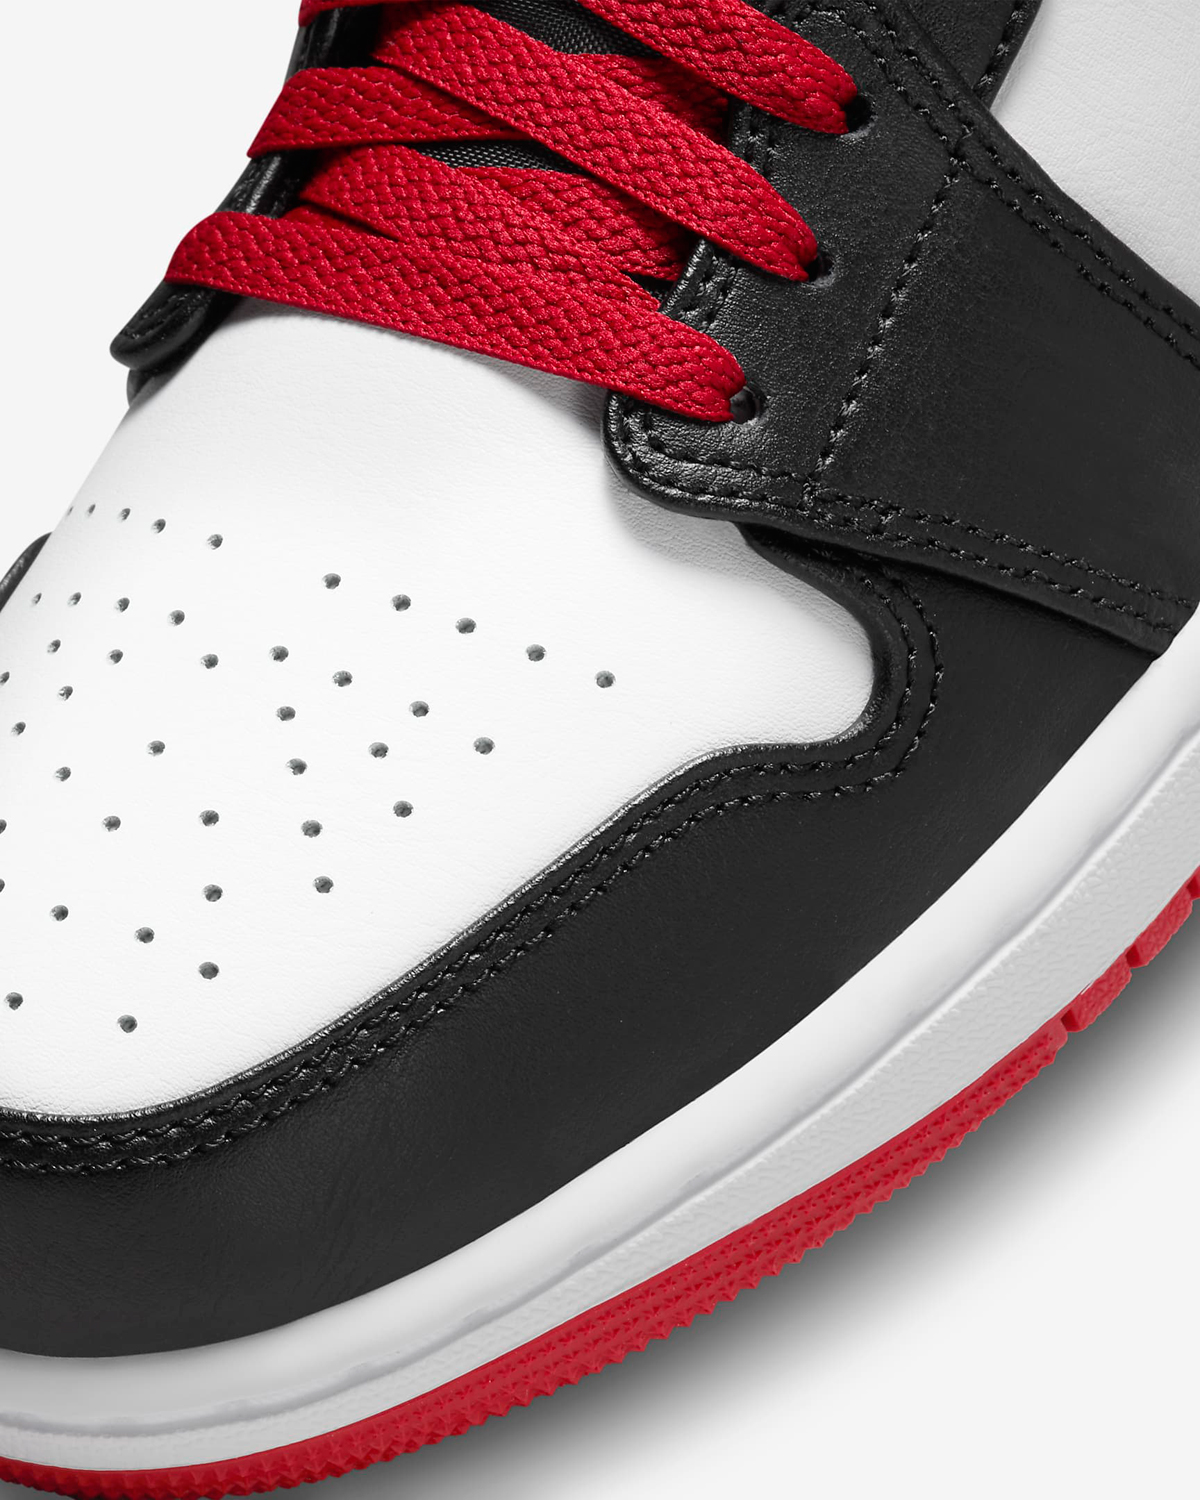 Air-Jordan-1-Mid-White-Black-Gym-Red-Release-Date-7